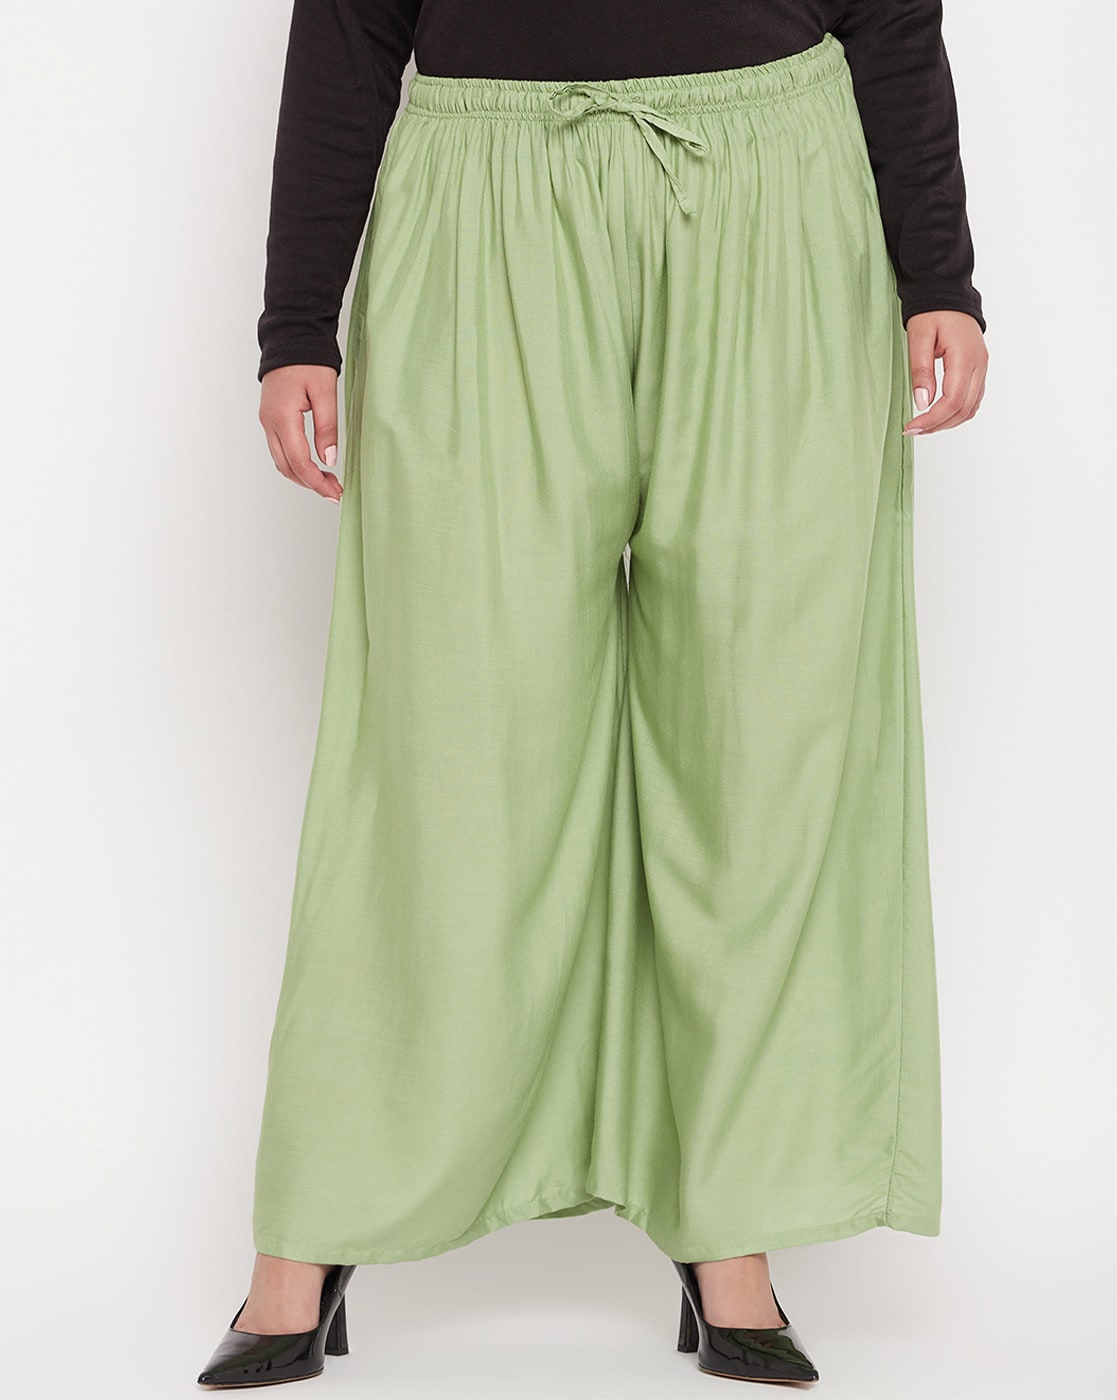 Line & Dot | Pants & Jumpsuits | Line Dot Revolve Light Green Wide Leg Pants  Small | Poshmark